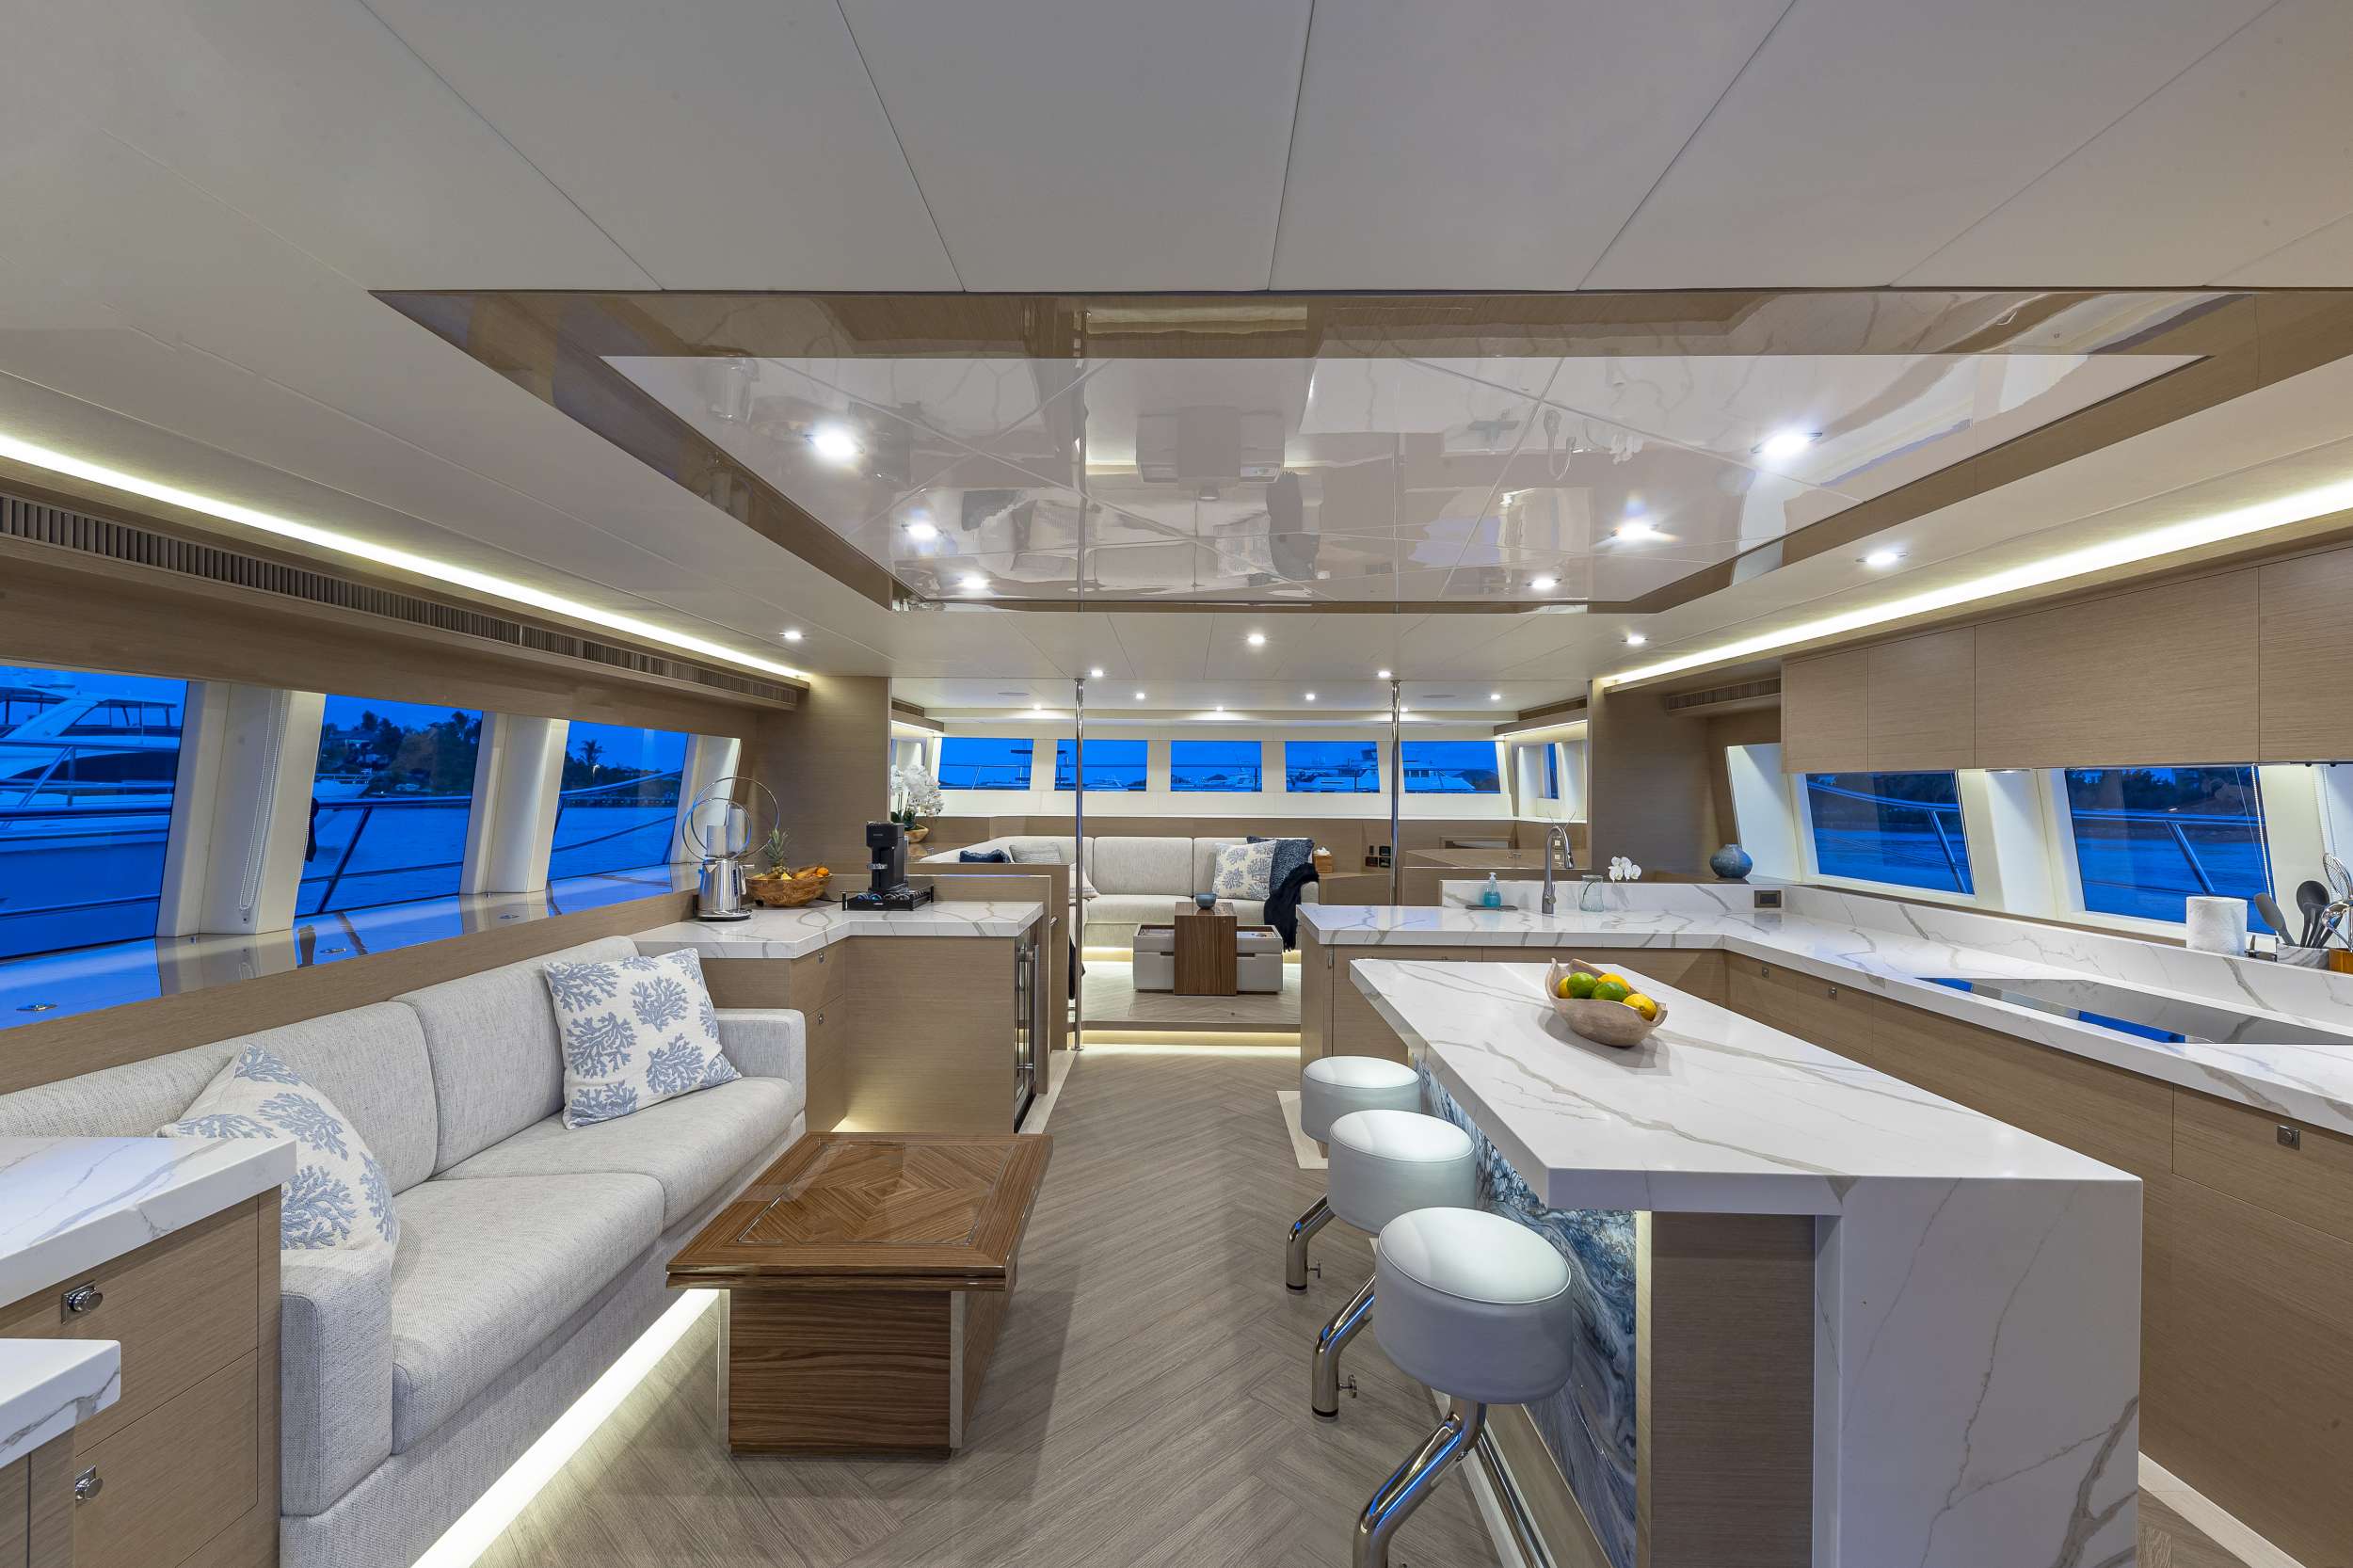 OMAKASE - Luxury yacht charter British Virgin Islands & Boat hire in Bahamas & Caribbean 2